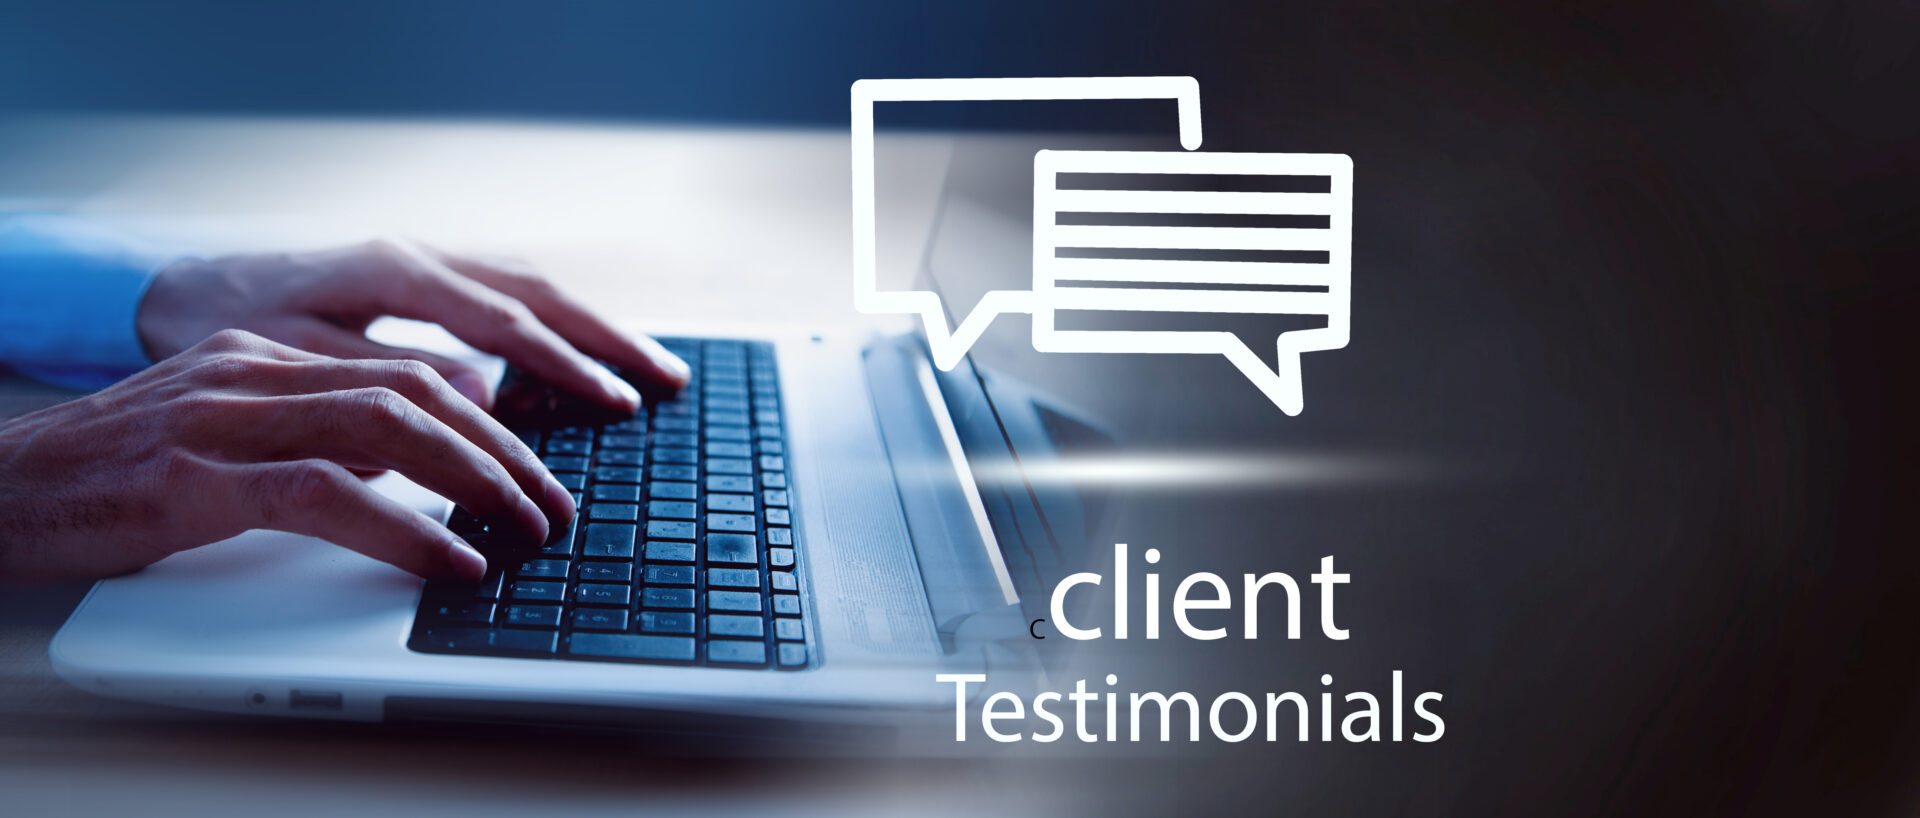 Testimonials Feedback Client Service Business Internet